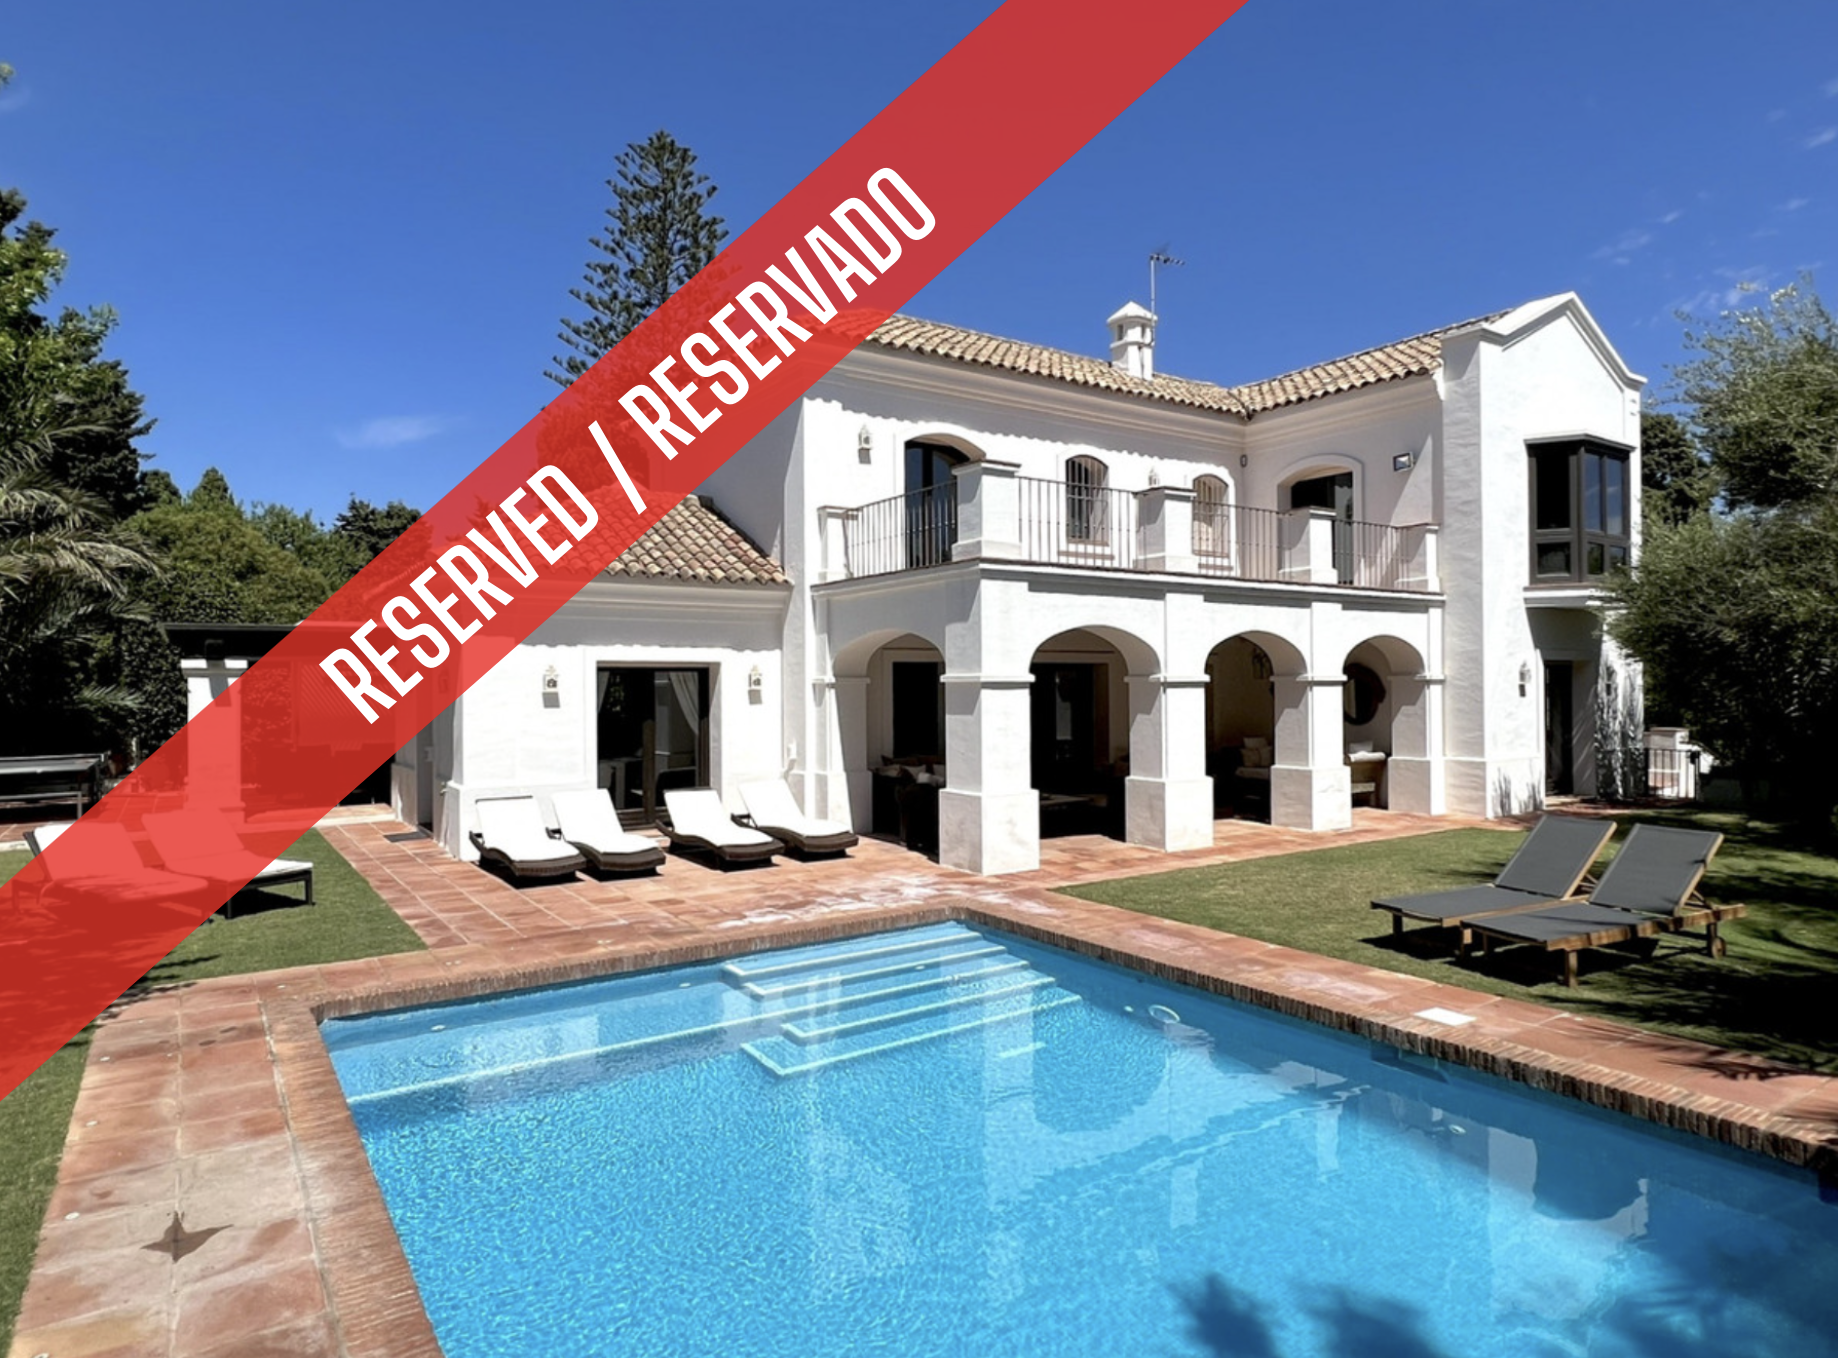 This stunning luxury villa is located in the prestigious area of Casasola, Guadalmina Baja